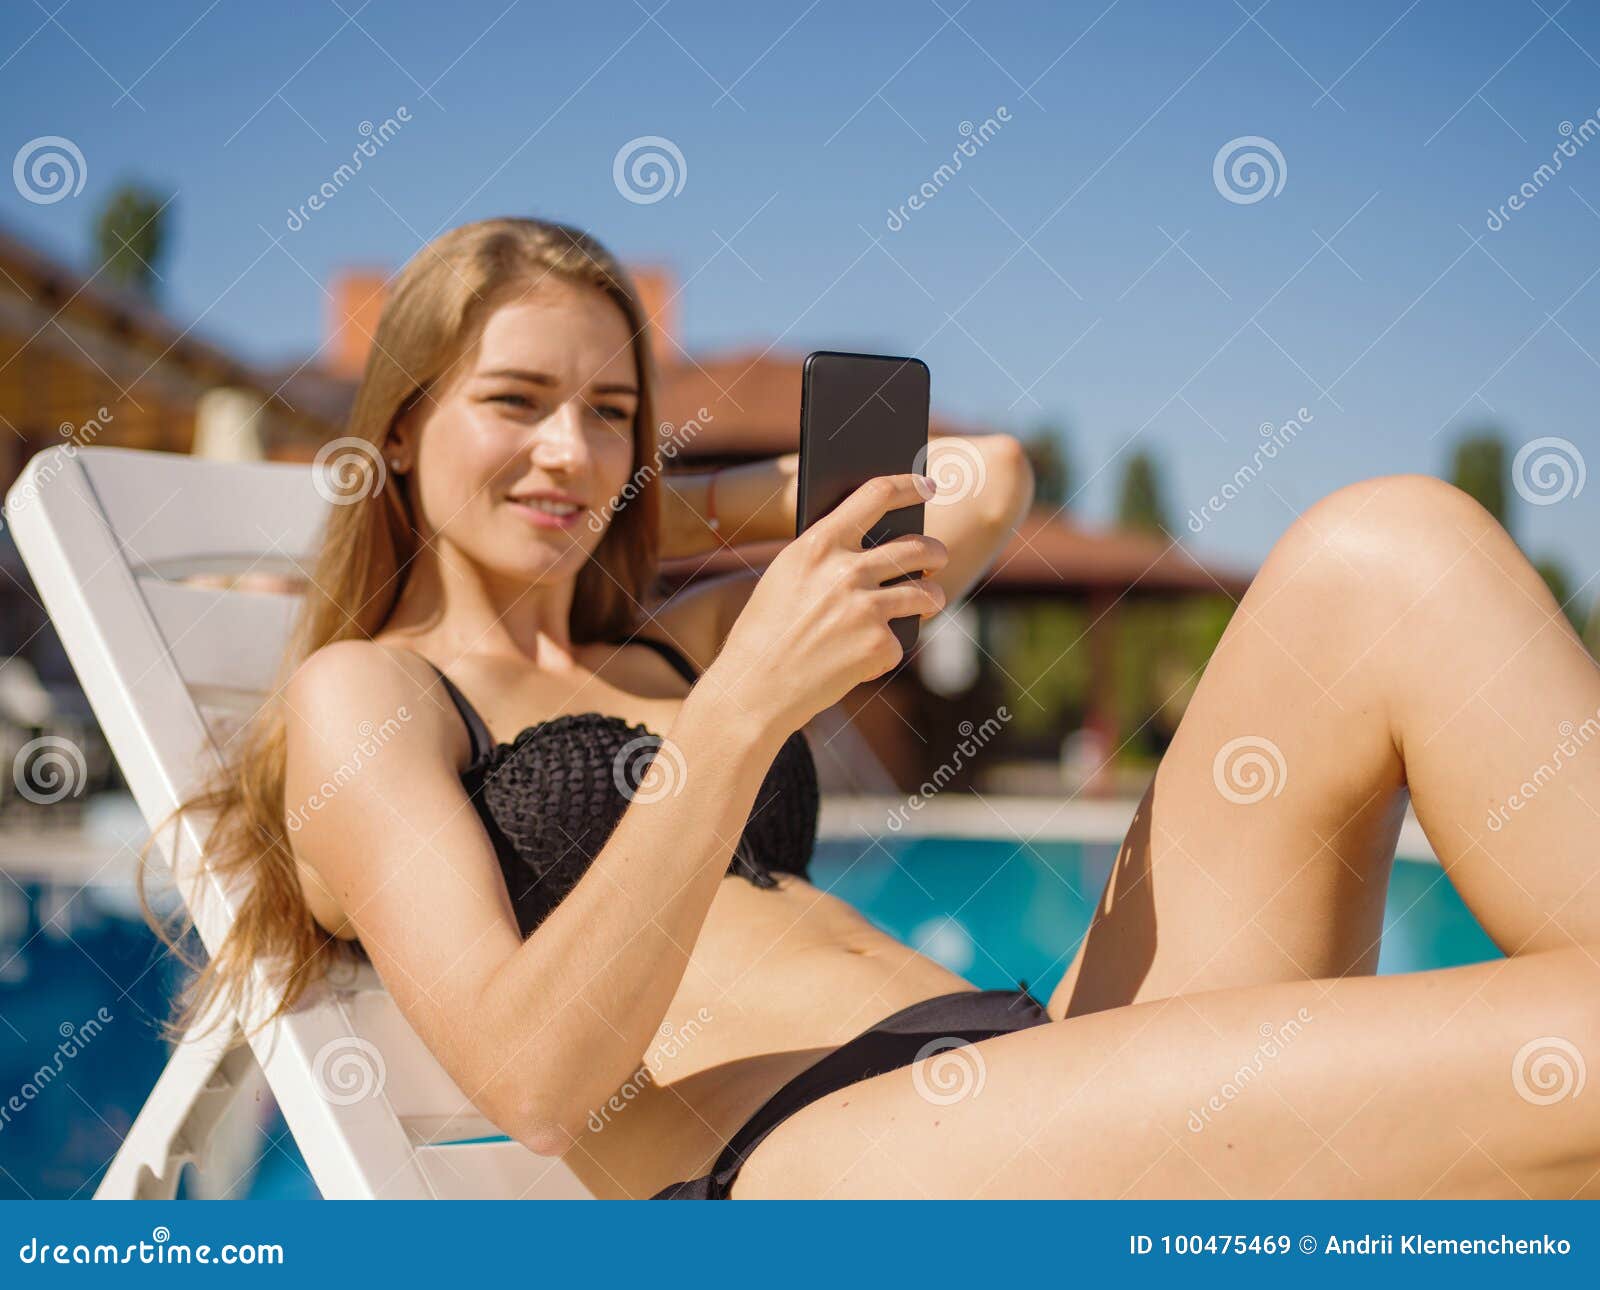 cute blonde girl bikini selfie gallerie